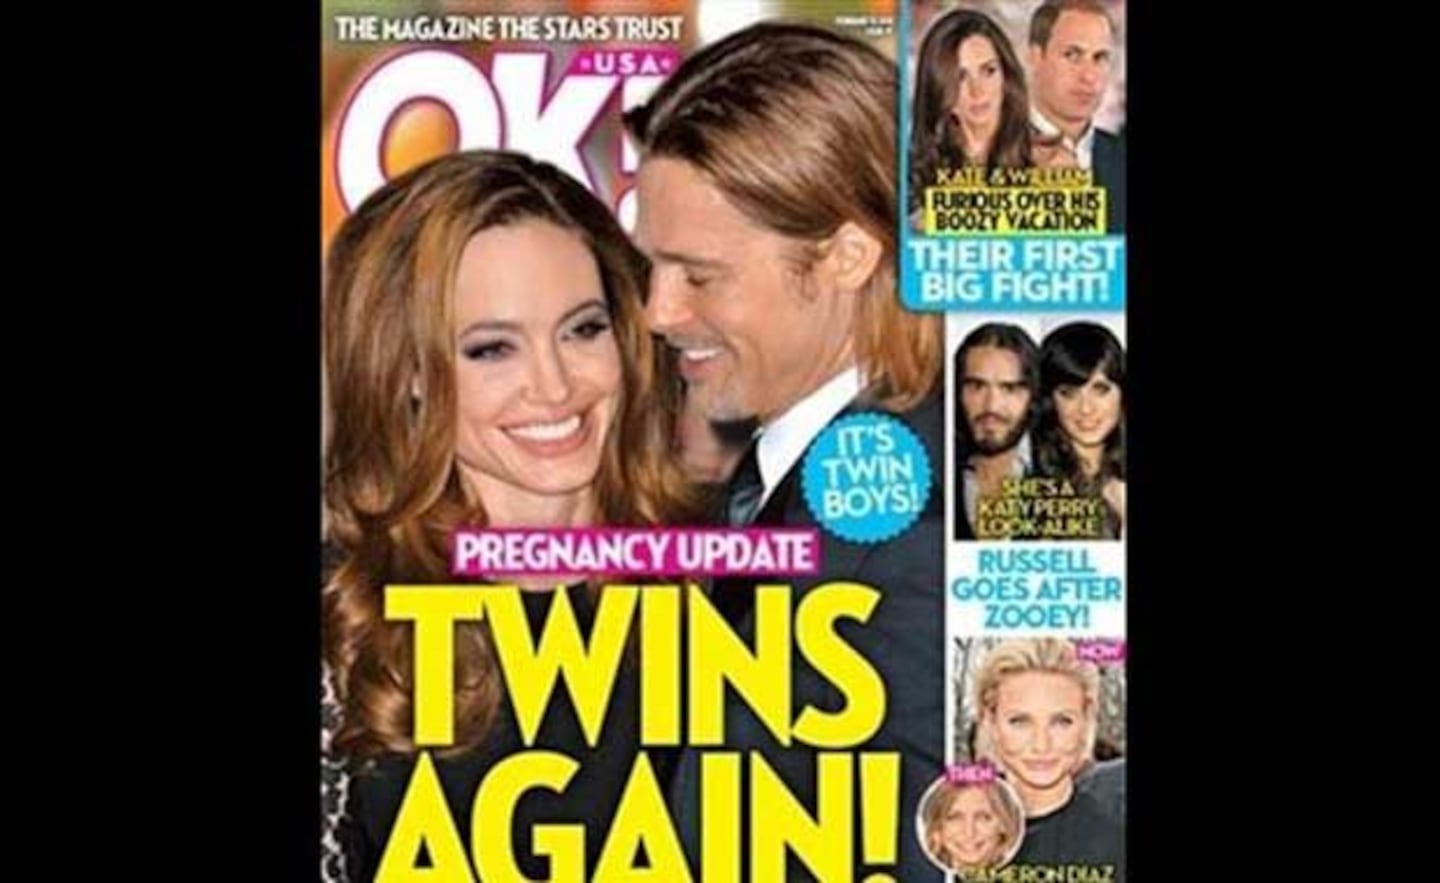 Angelina Jolie, ¿otra vez embarazada de mellizos? (Foto: revista OK!)